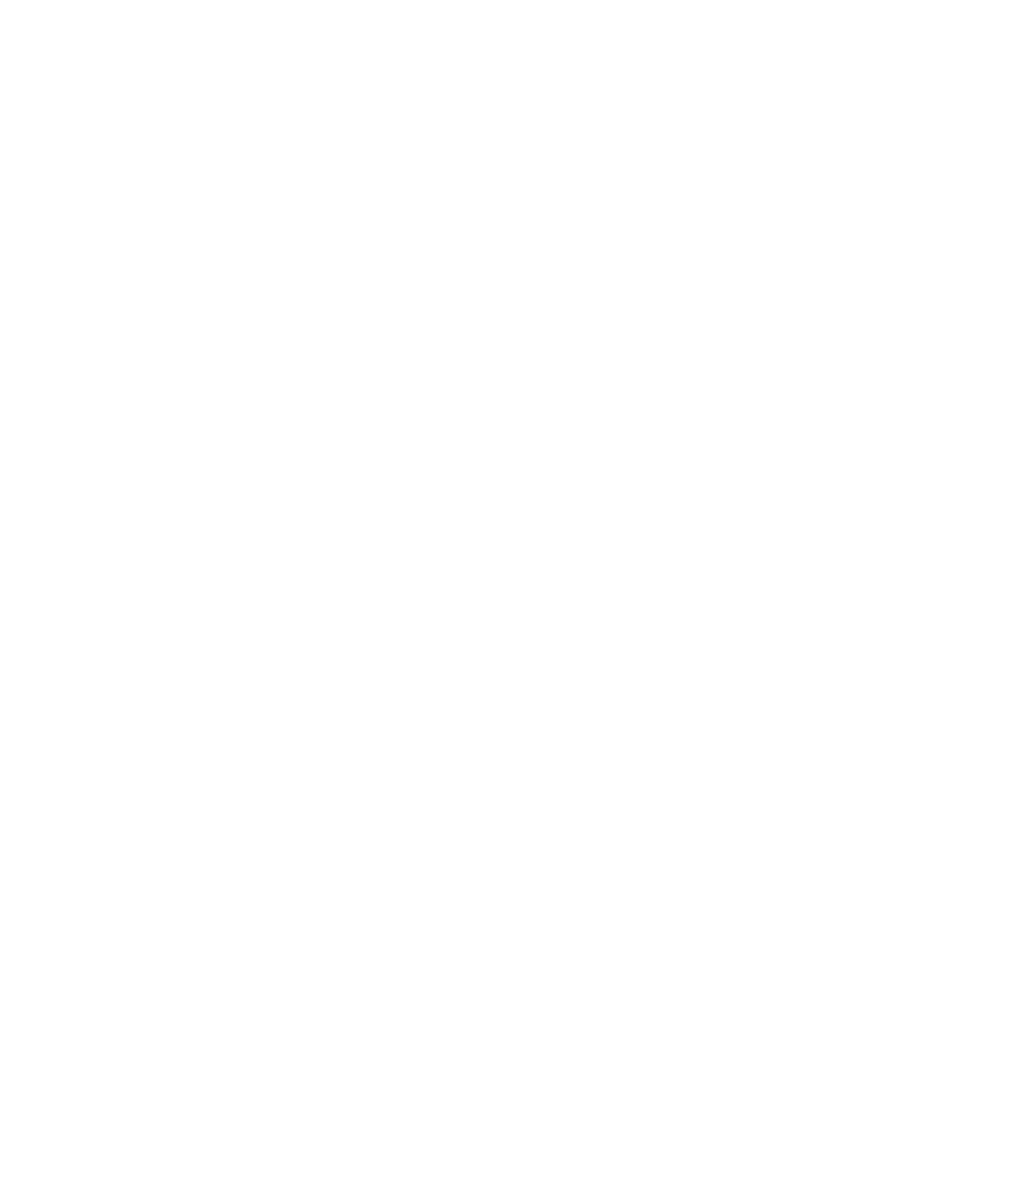 Hello Trouble Hall